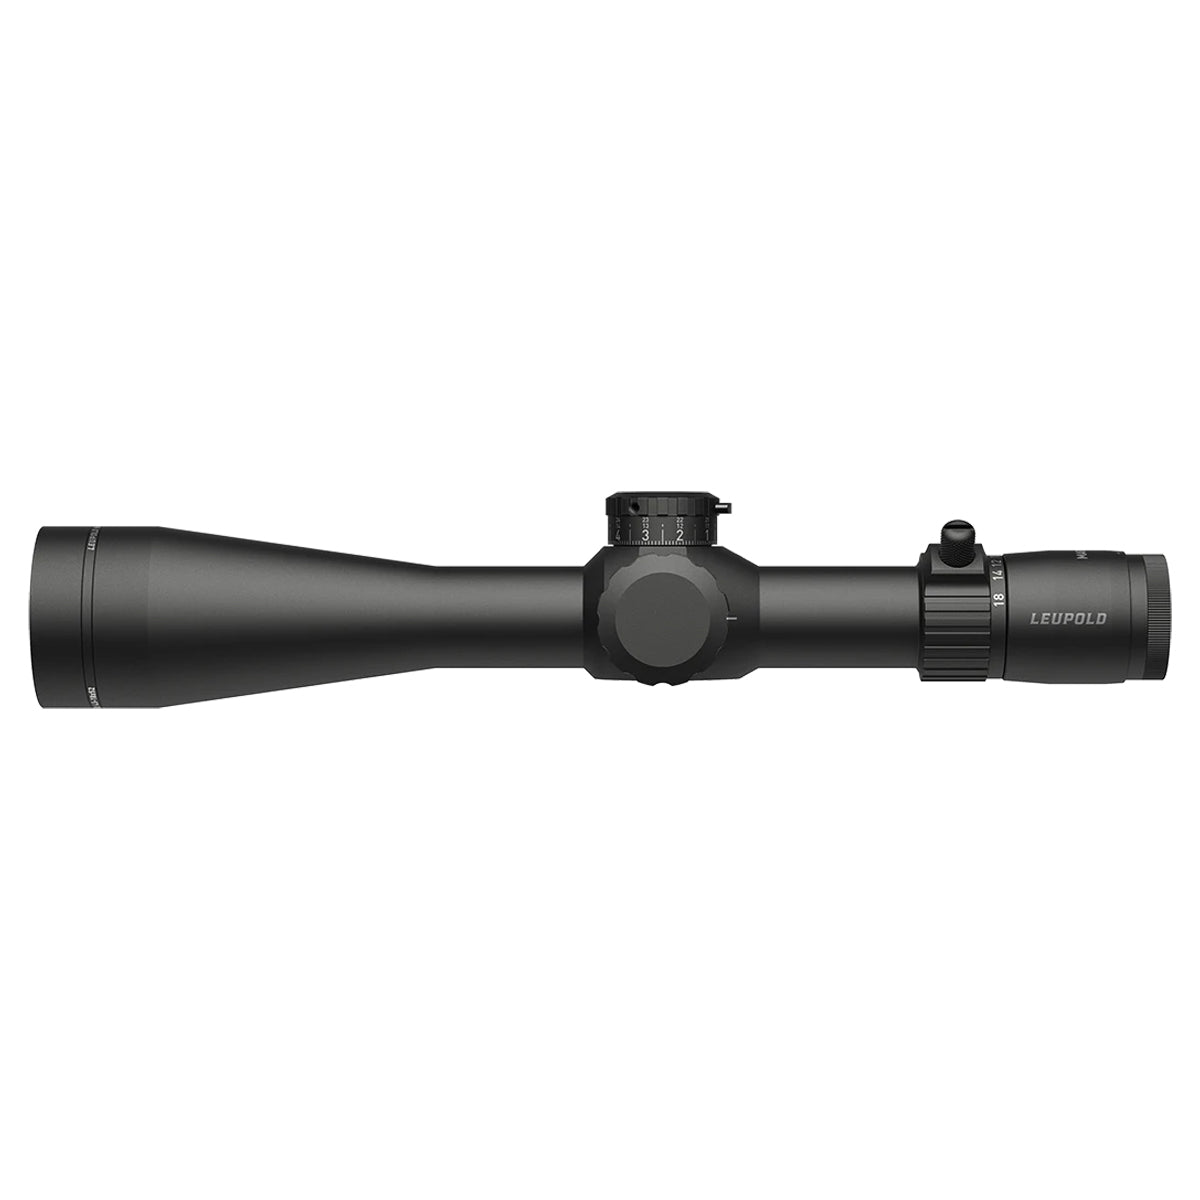 Leupold Mark 4HD 4.5-18x52MM Riflescope in M5C3 PR2-Mil (183626) by GOHUNT | Leupold - GOHUNT Shop